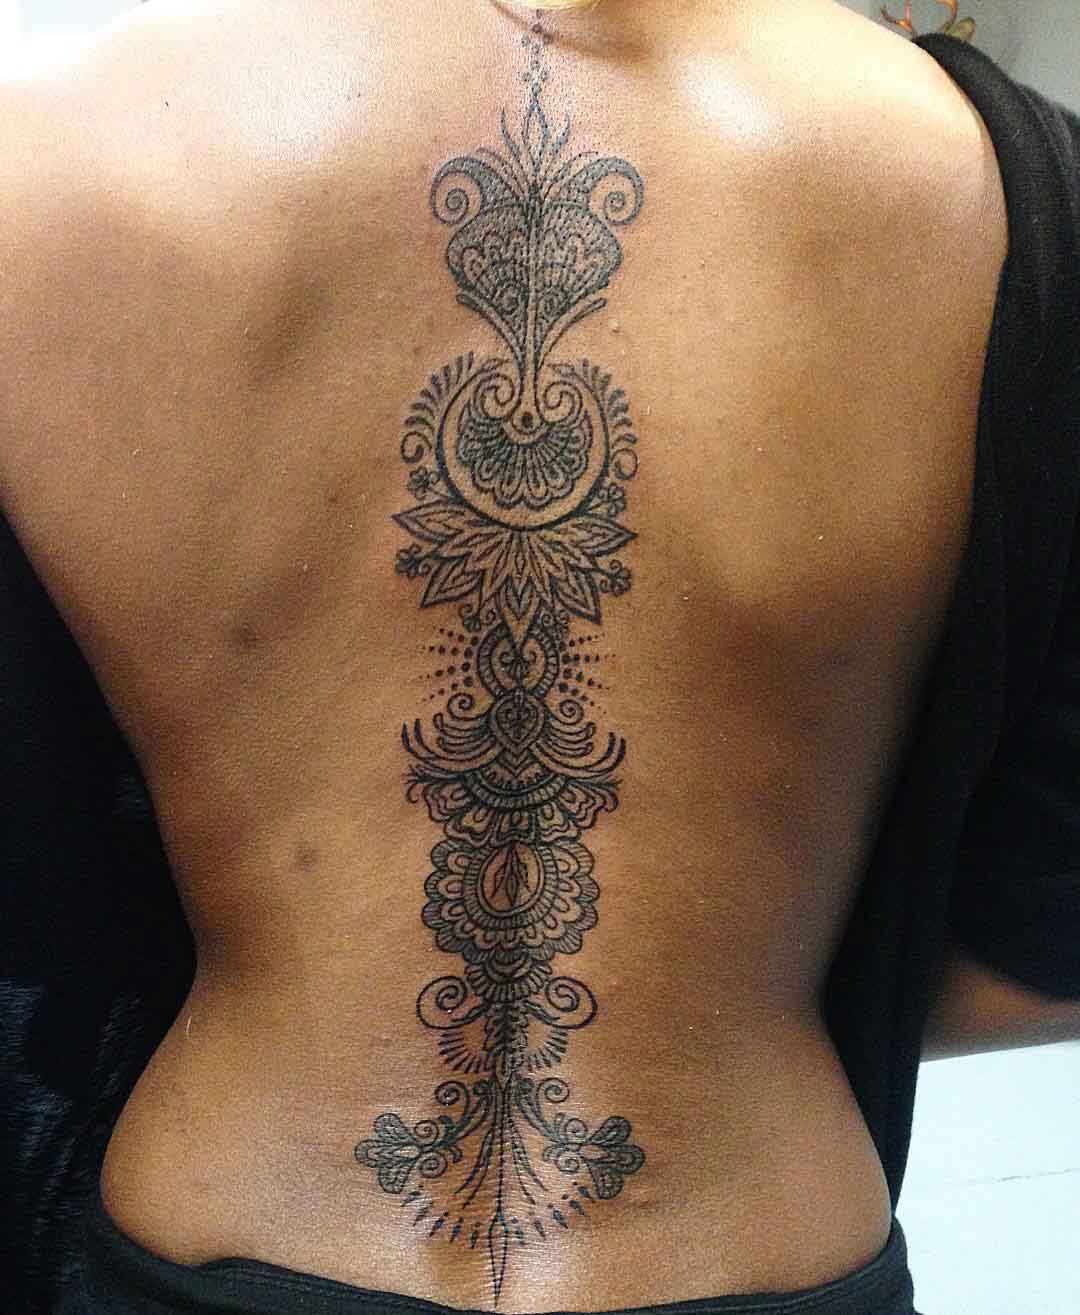 Spine Tattoo For Girls by emilynewgent